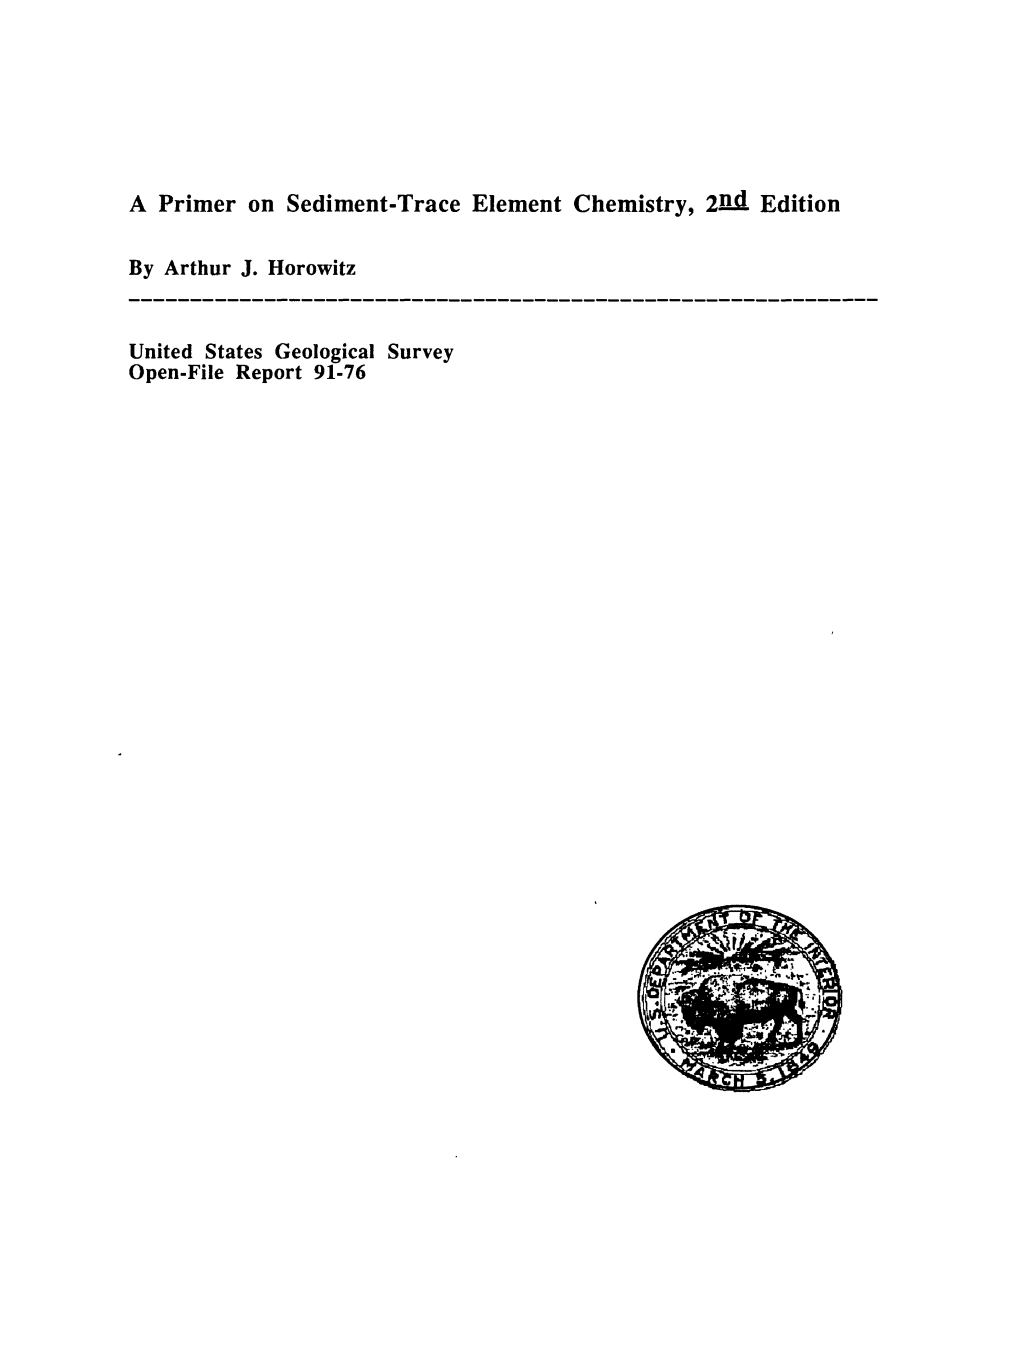 A Primer on Sediment-Trace Element Chemistry, 2Nd. Edition by Arthur J